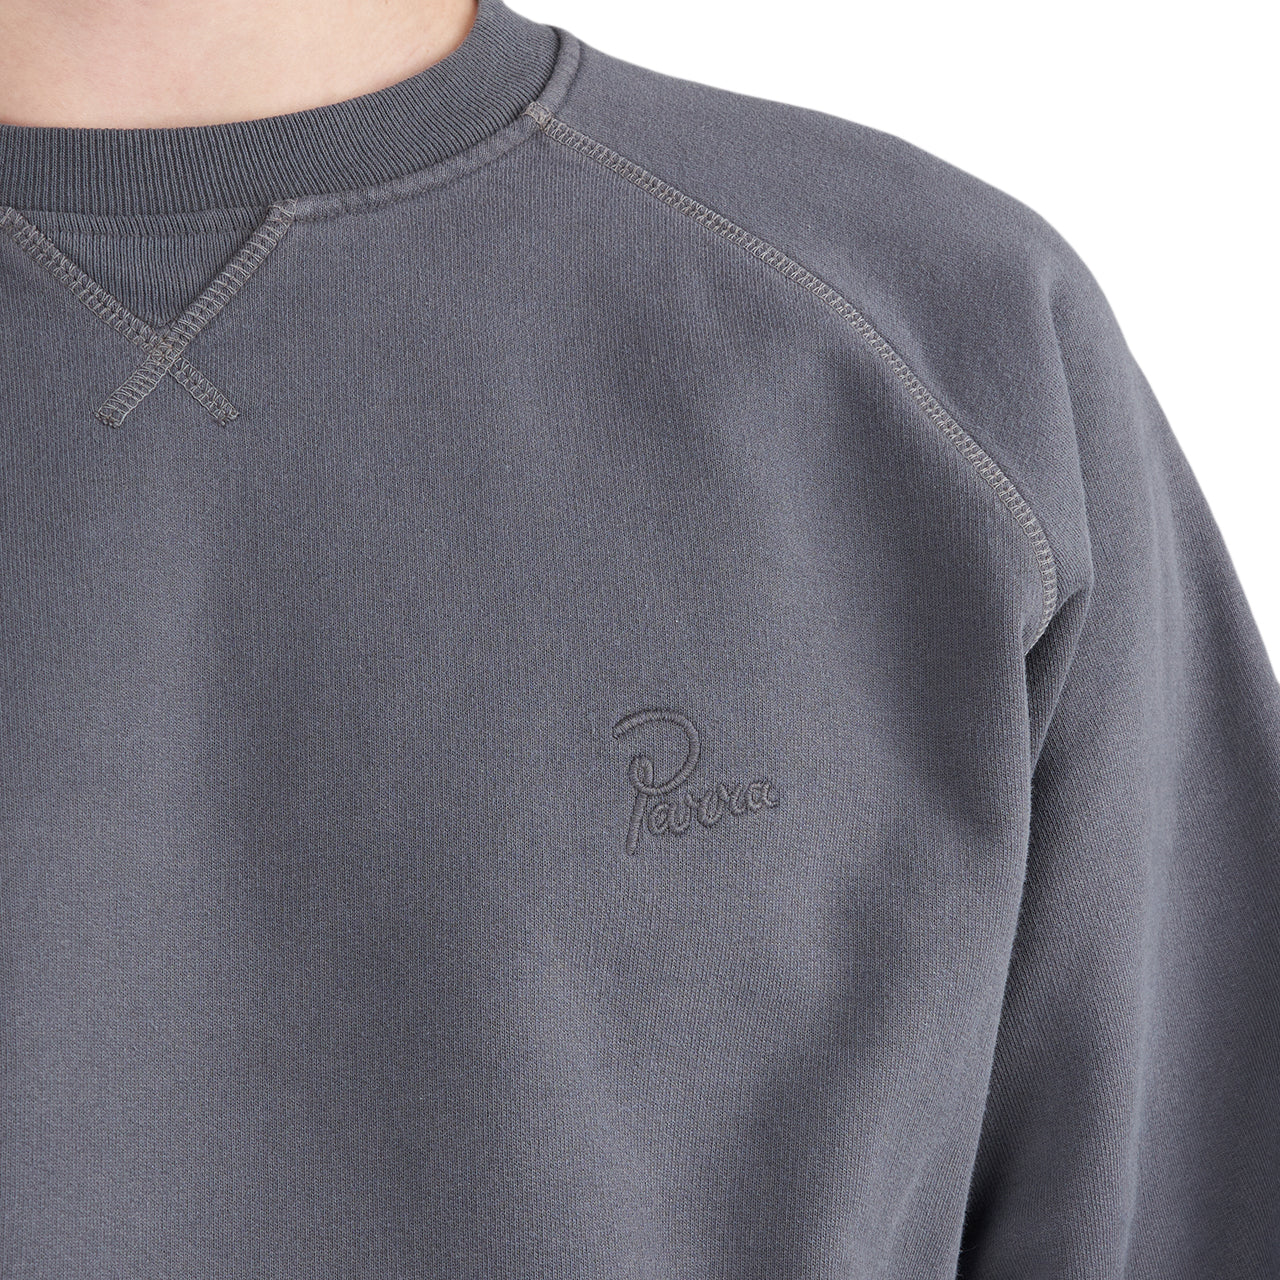 by Parra Logo Crew Neck Sweatshirt (Grau)  - Allike Store